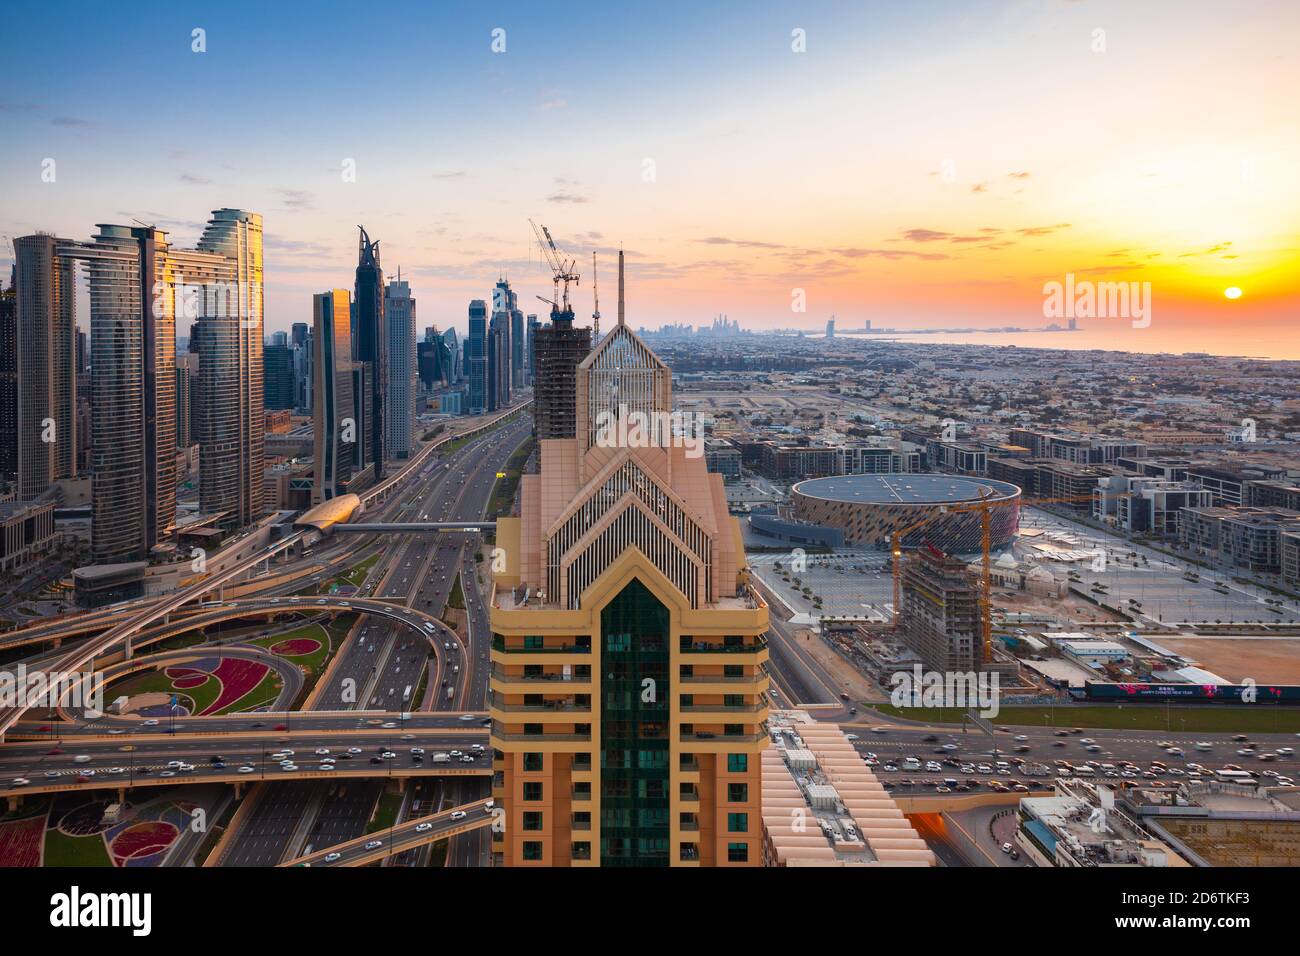 The view of Dubai skyline with Burj Khalifa, Sheikh Zayed road and sunset over the gulf, UAE. Stock Photo